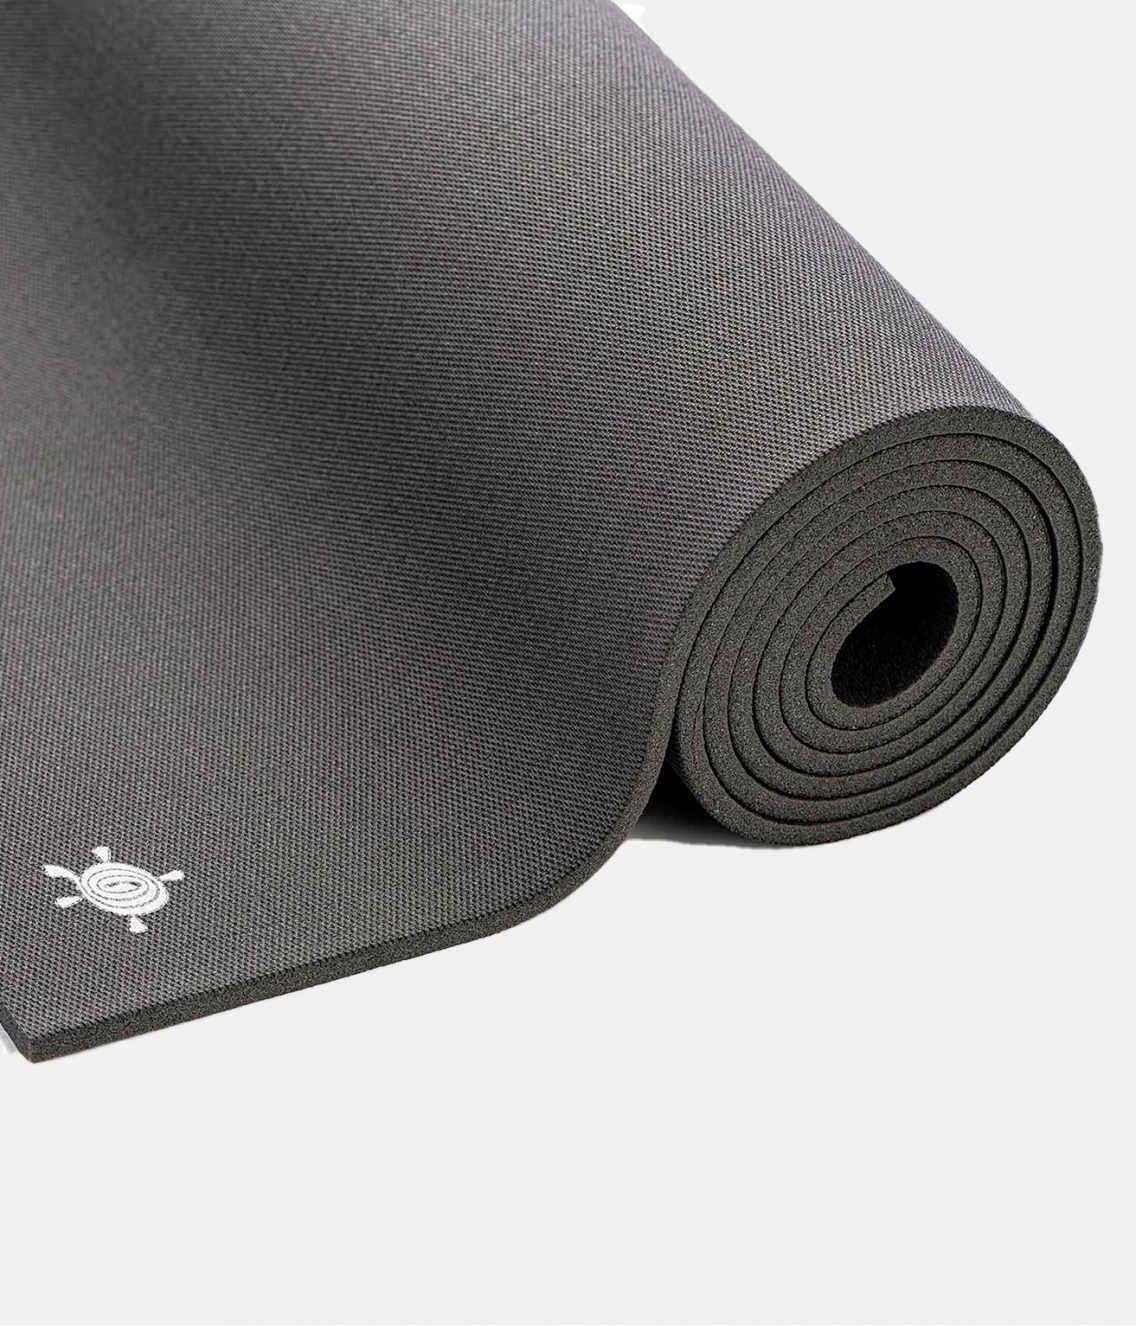 Коврик для йоги Kurma Black 200*80*0,65 см - Anthracite